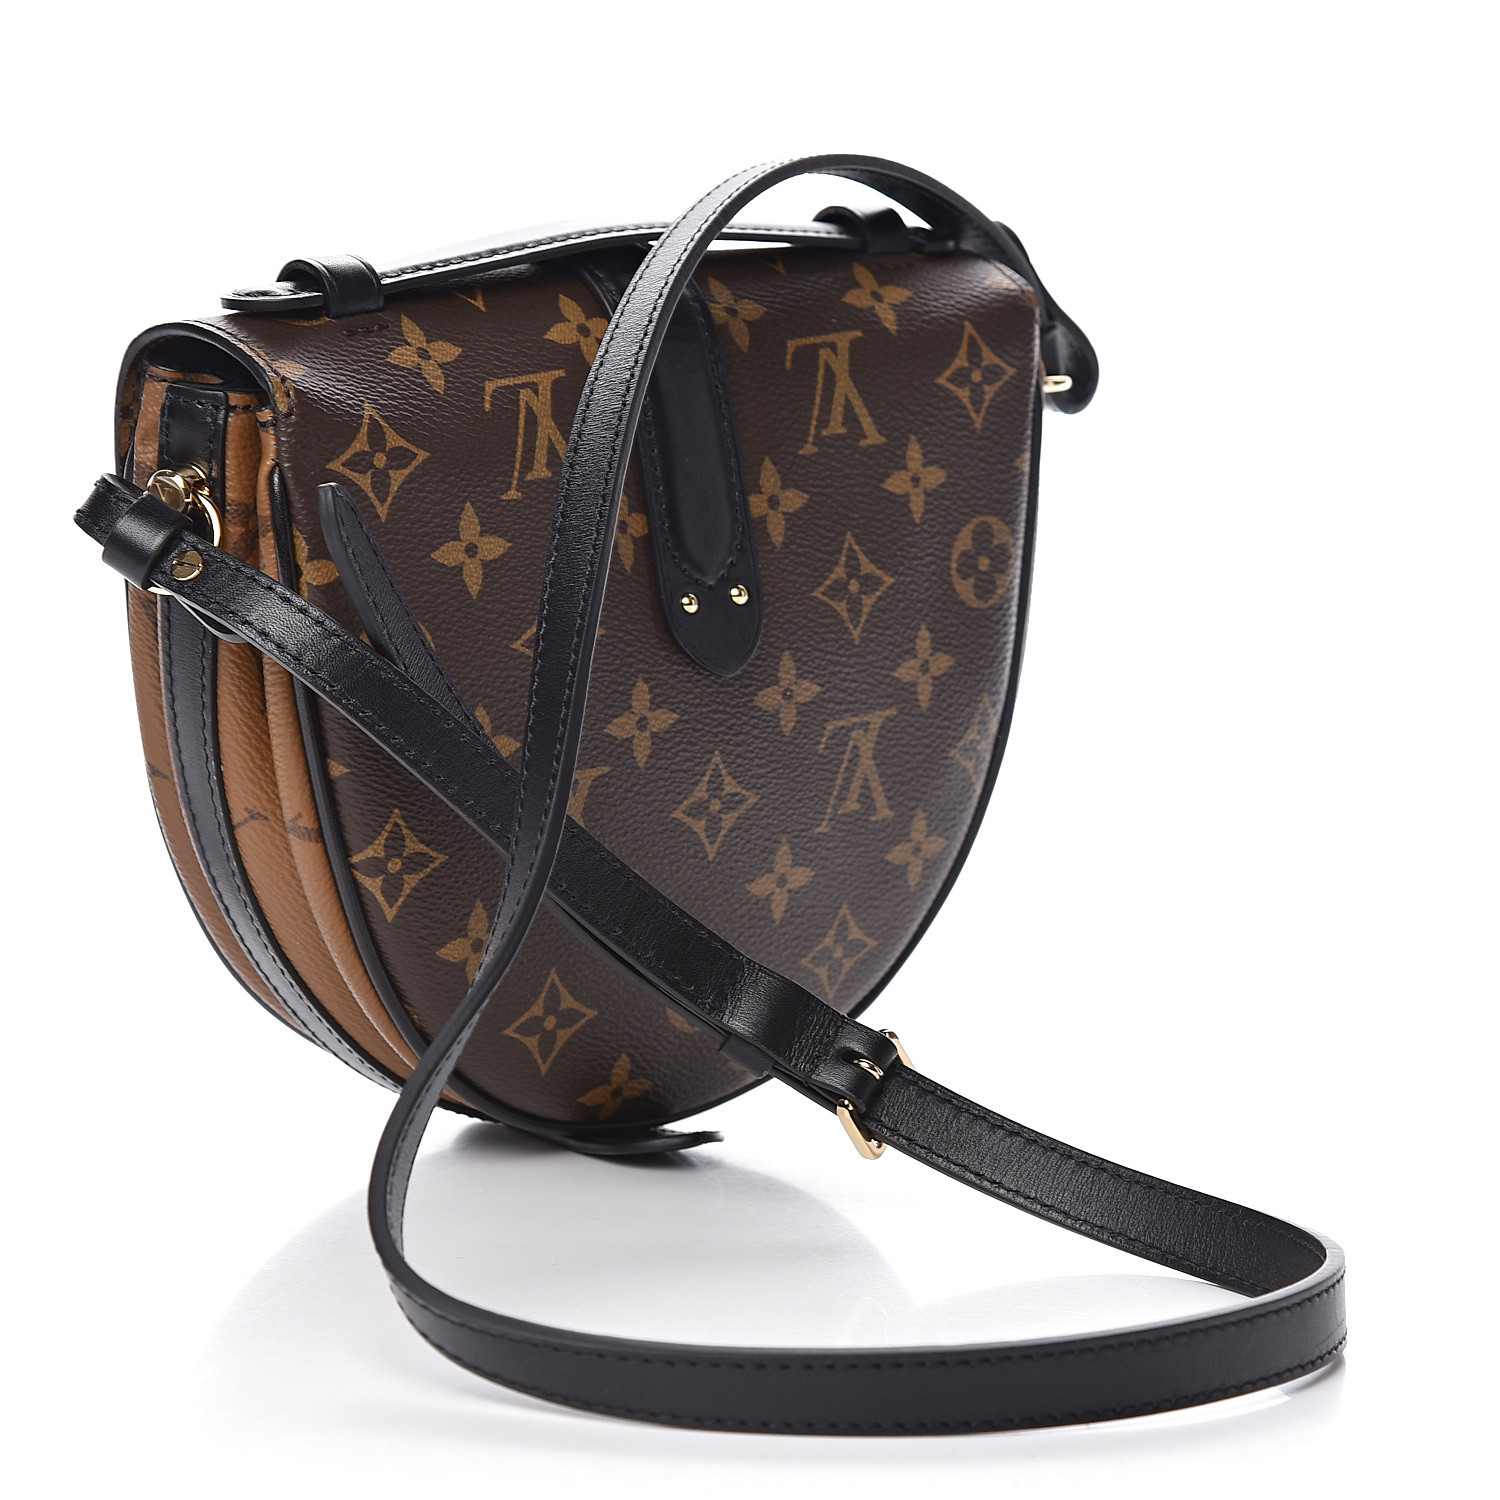 Chantilly lock cloth handbag Louis Vuitton White in Cloth - 6018940